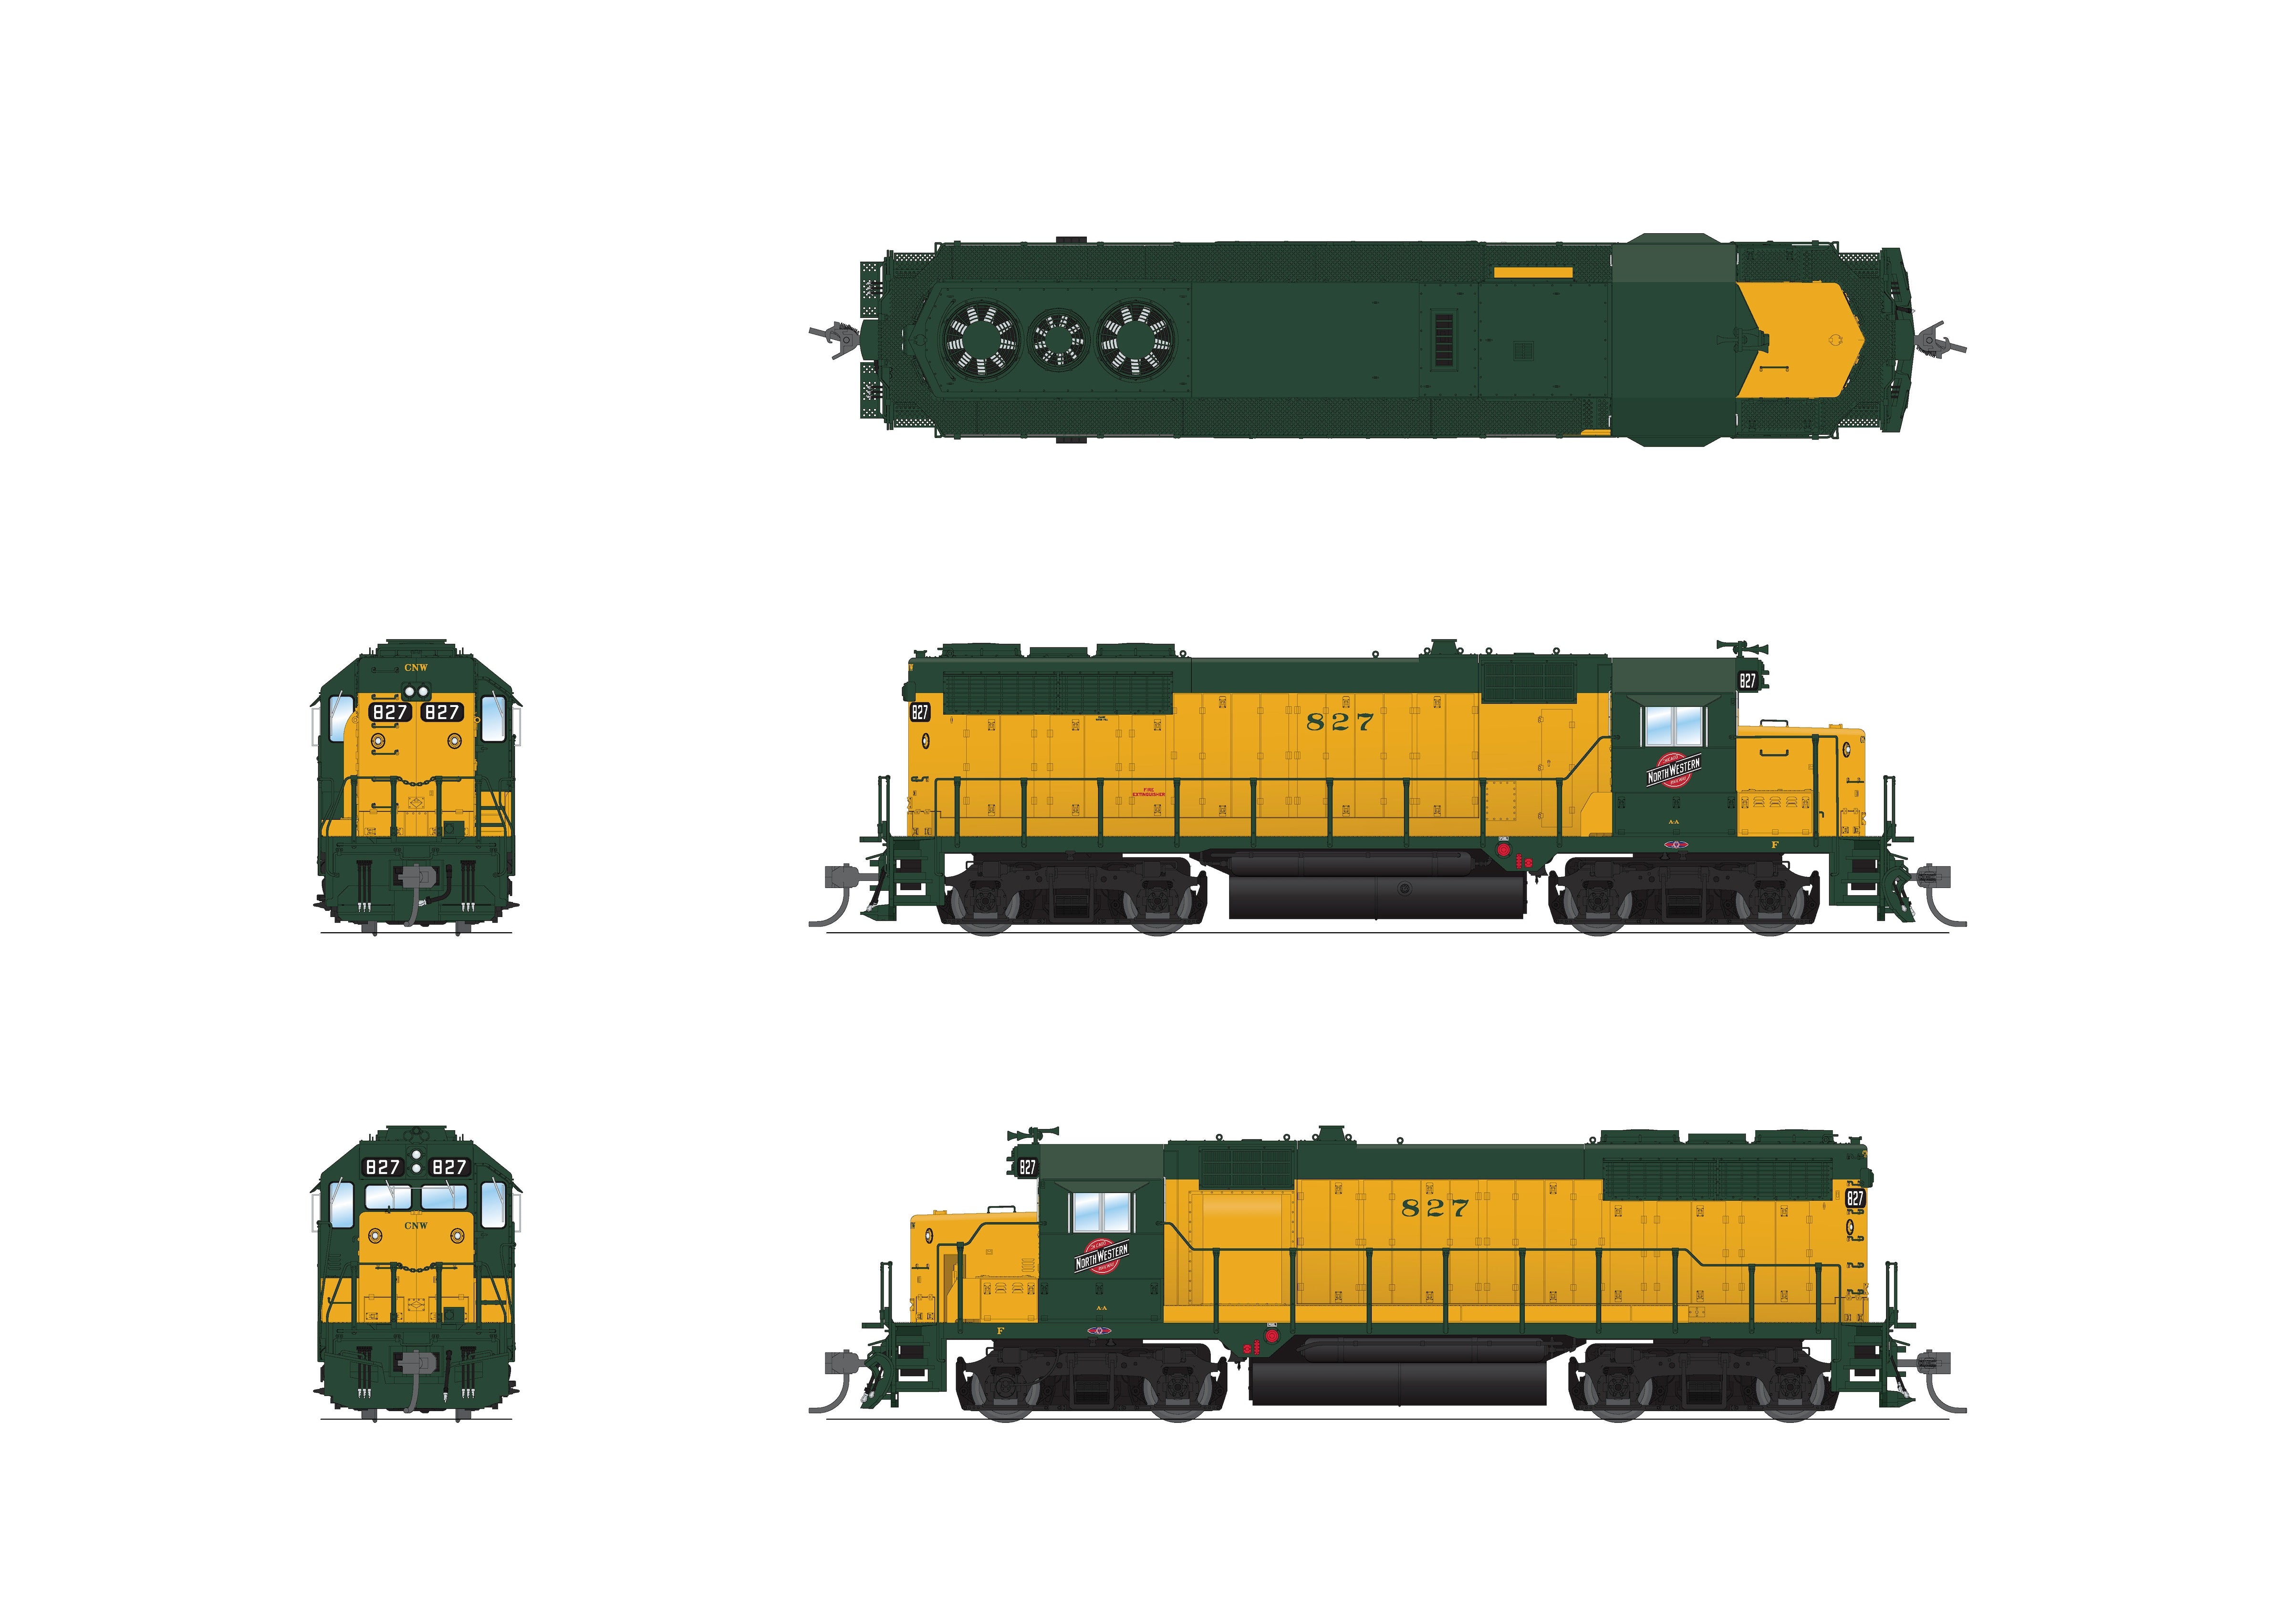 8906 EMD GP35, CNW 833, Green & Yellow, No-Sound / DCC-Ready, HO